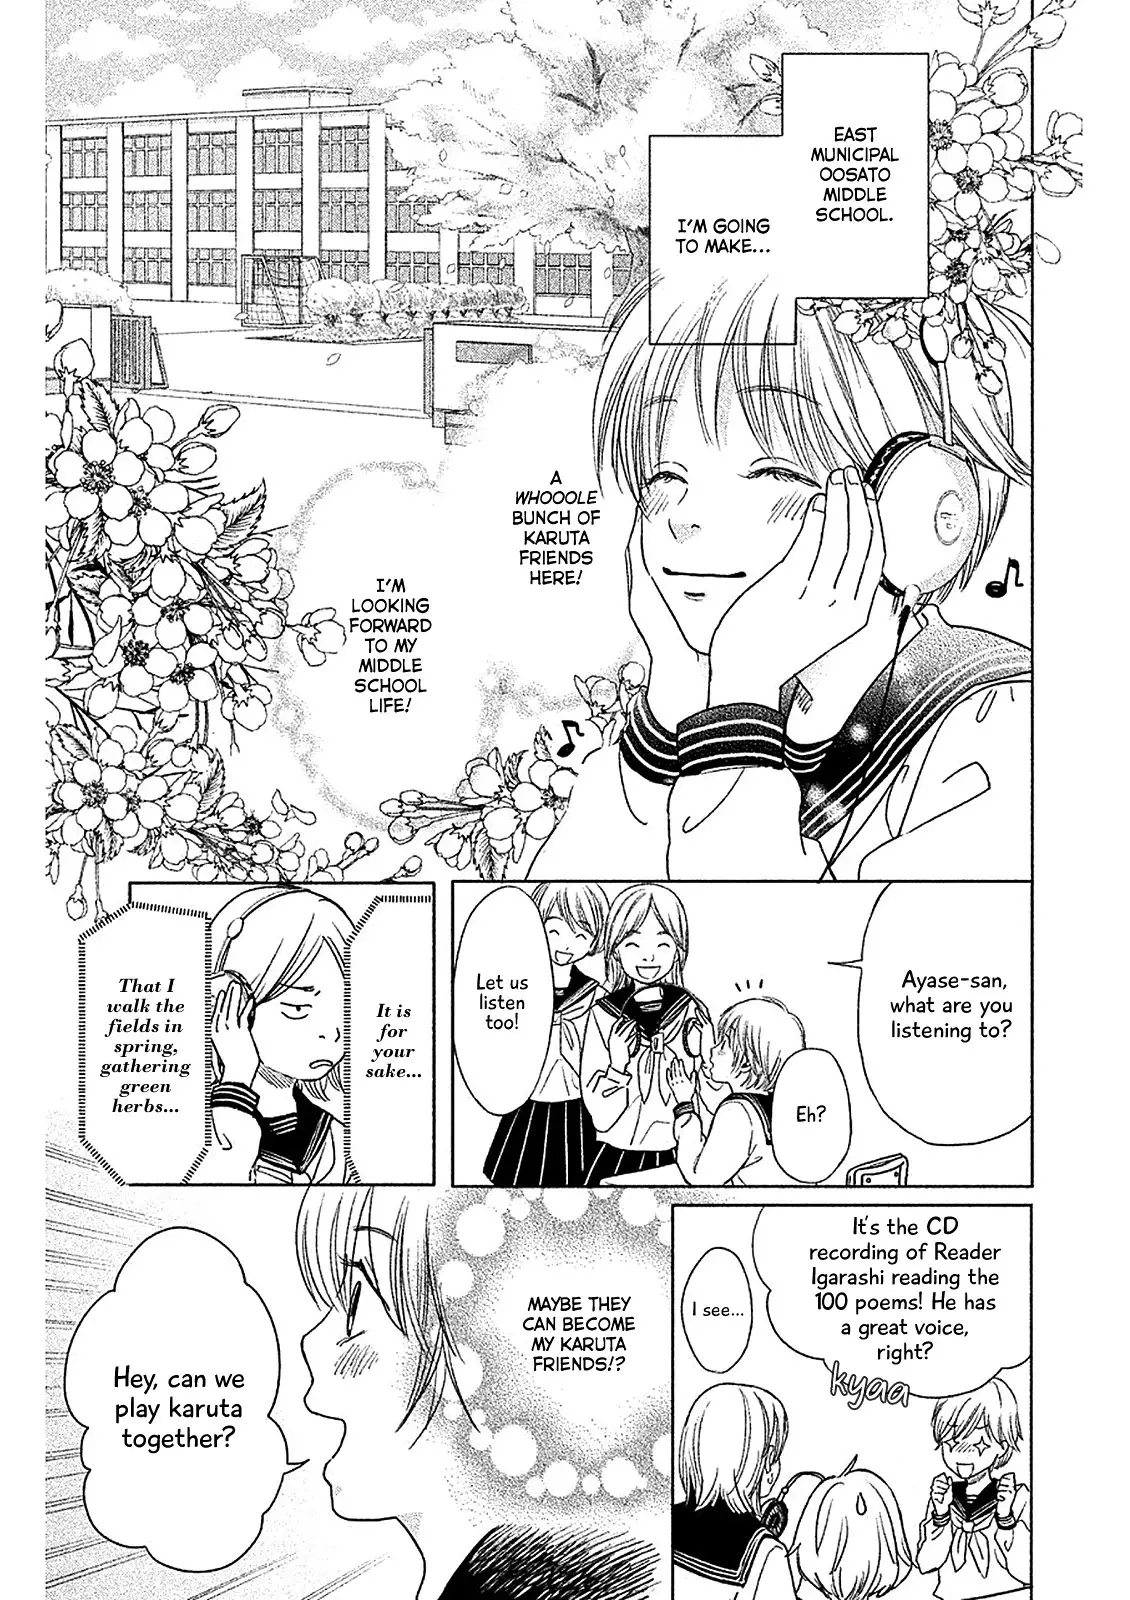 Chihayafuru: Middle School Arc - 1 page 7